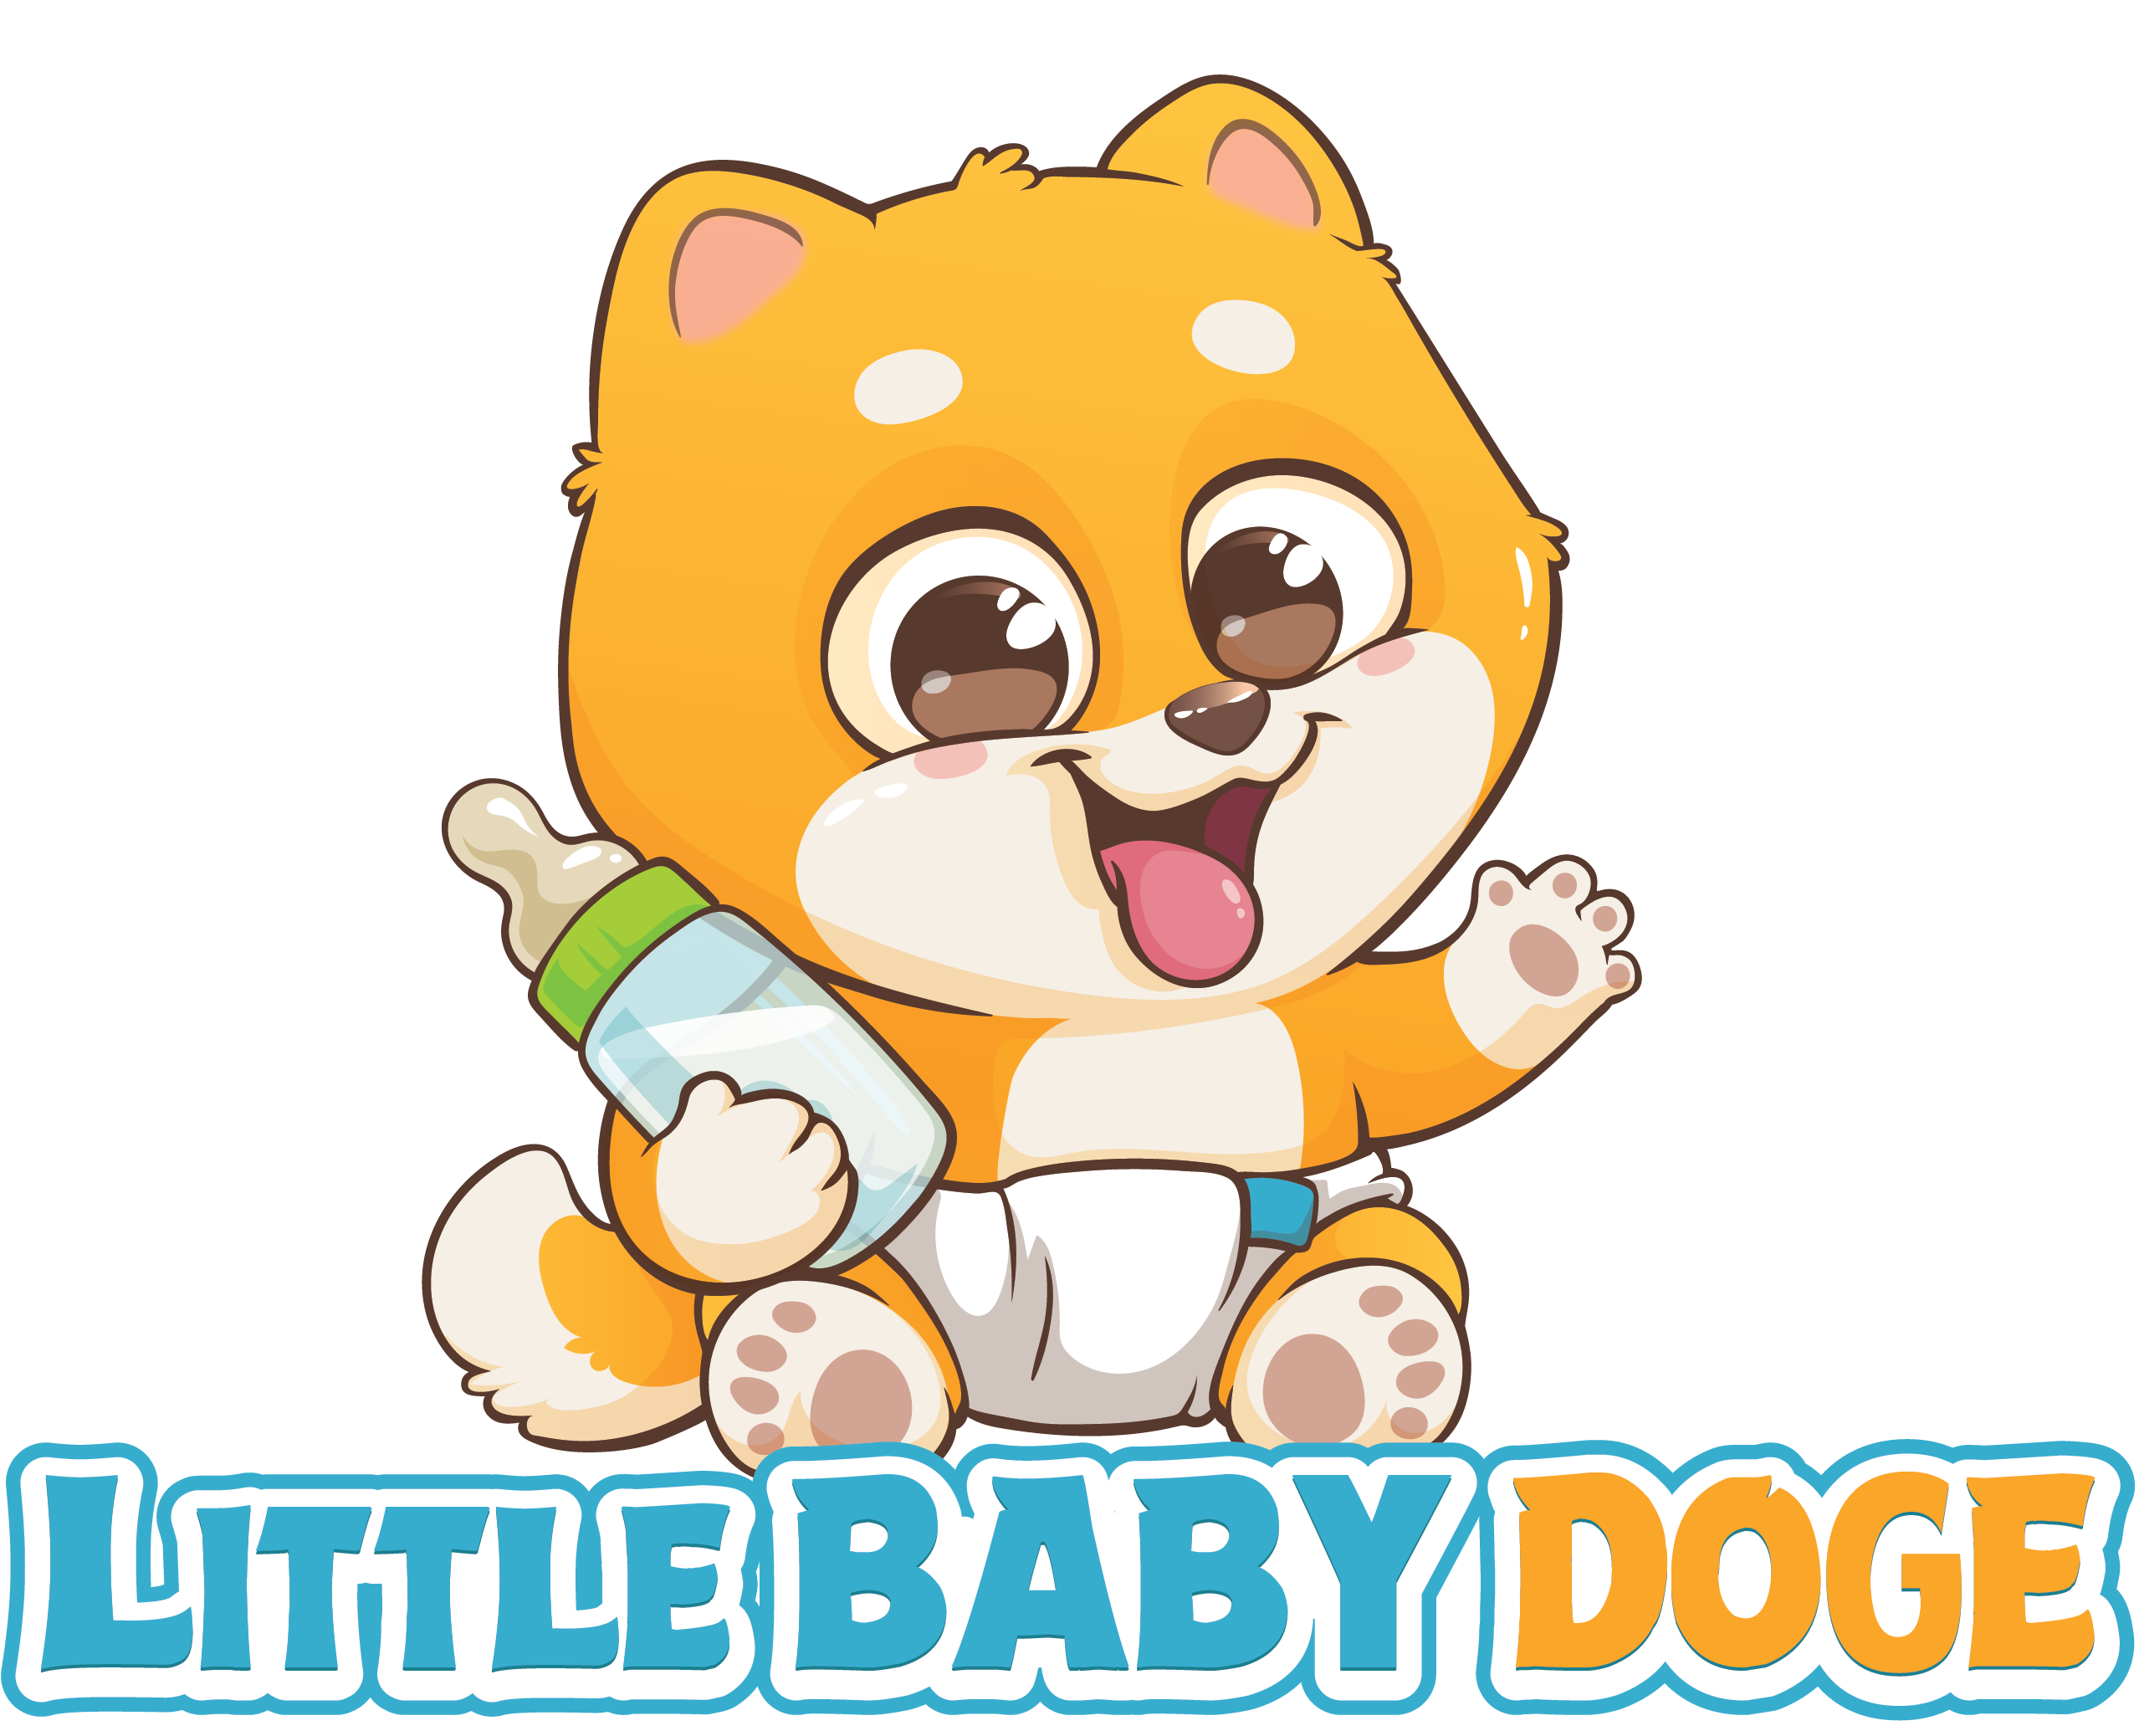 Little Baby Doge, Thursday, September 9, 2021, Press release picture